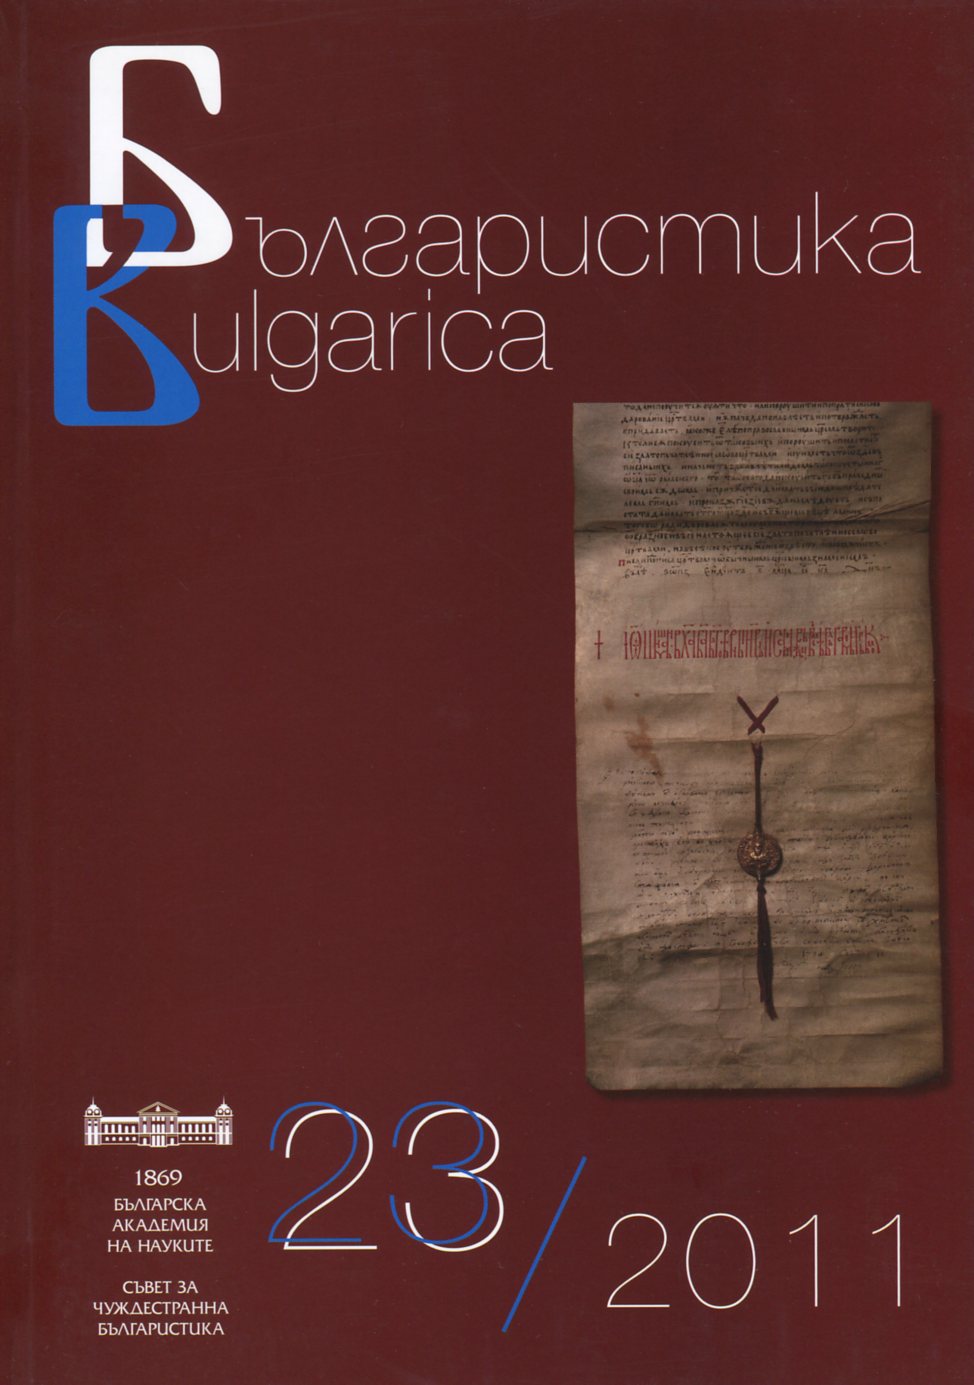 Luchia Antonova-Vasileva, Georgi Mitrinov. Dictionary of Bulgarian Dialects in the South Rhodopes, Drama and Syar Regions Cover Image